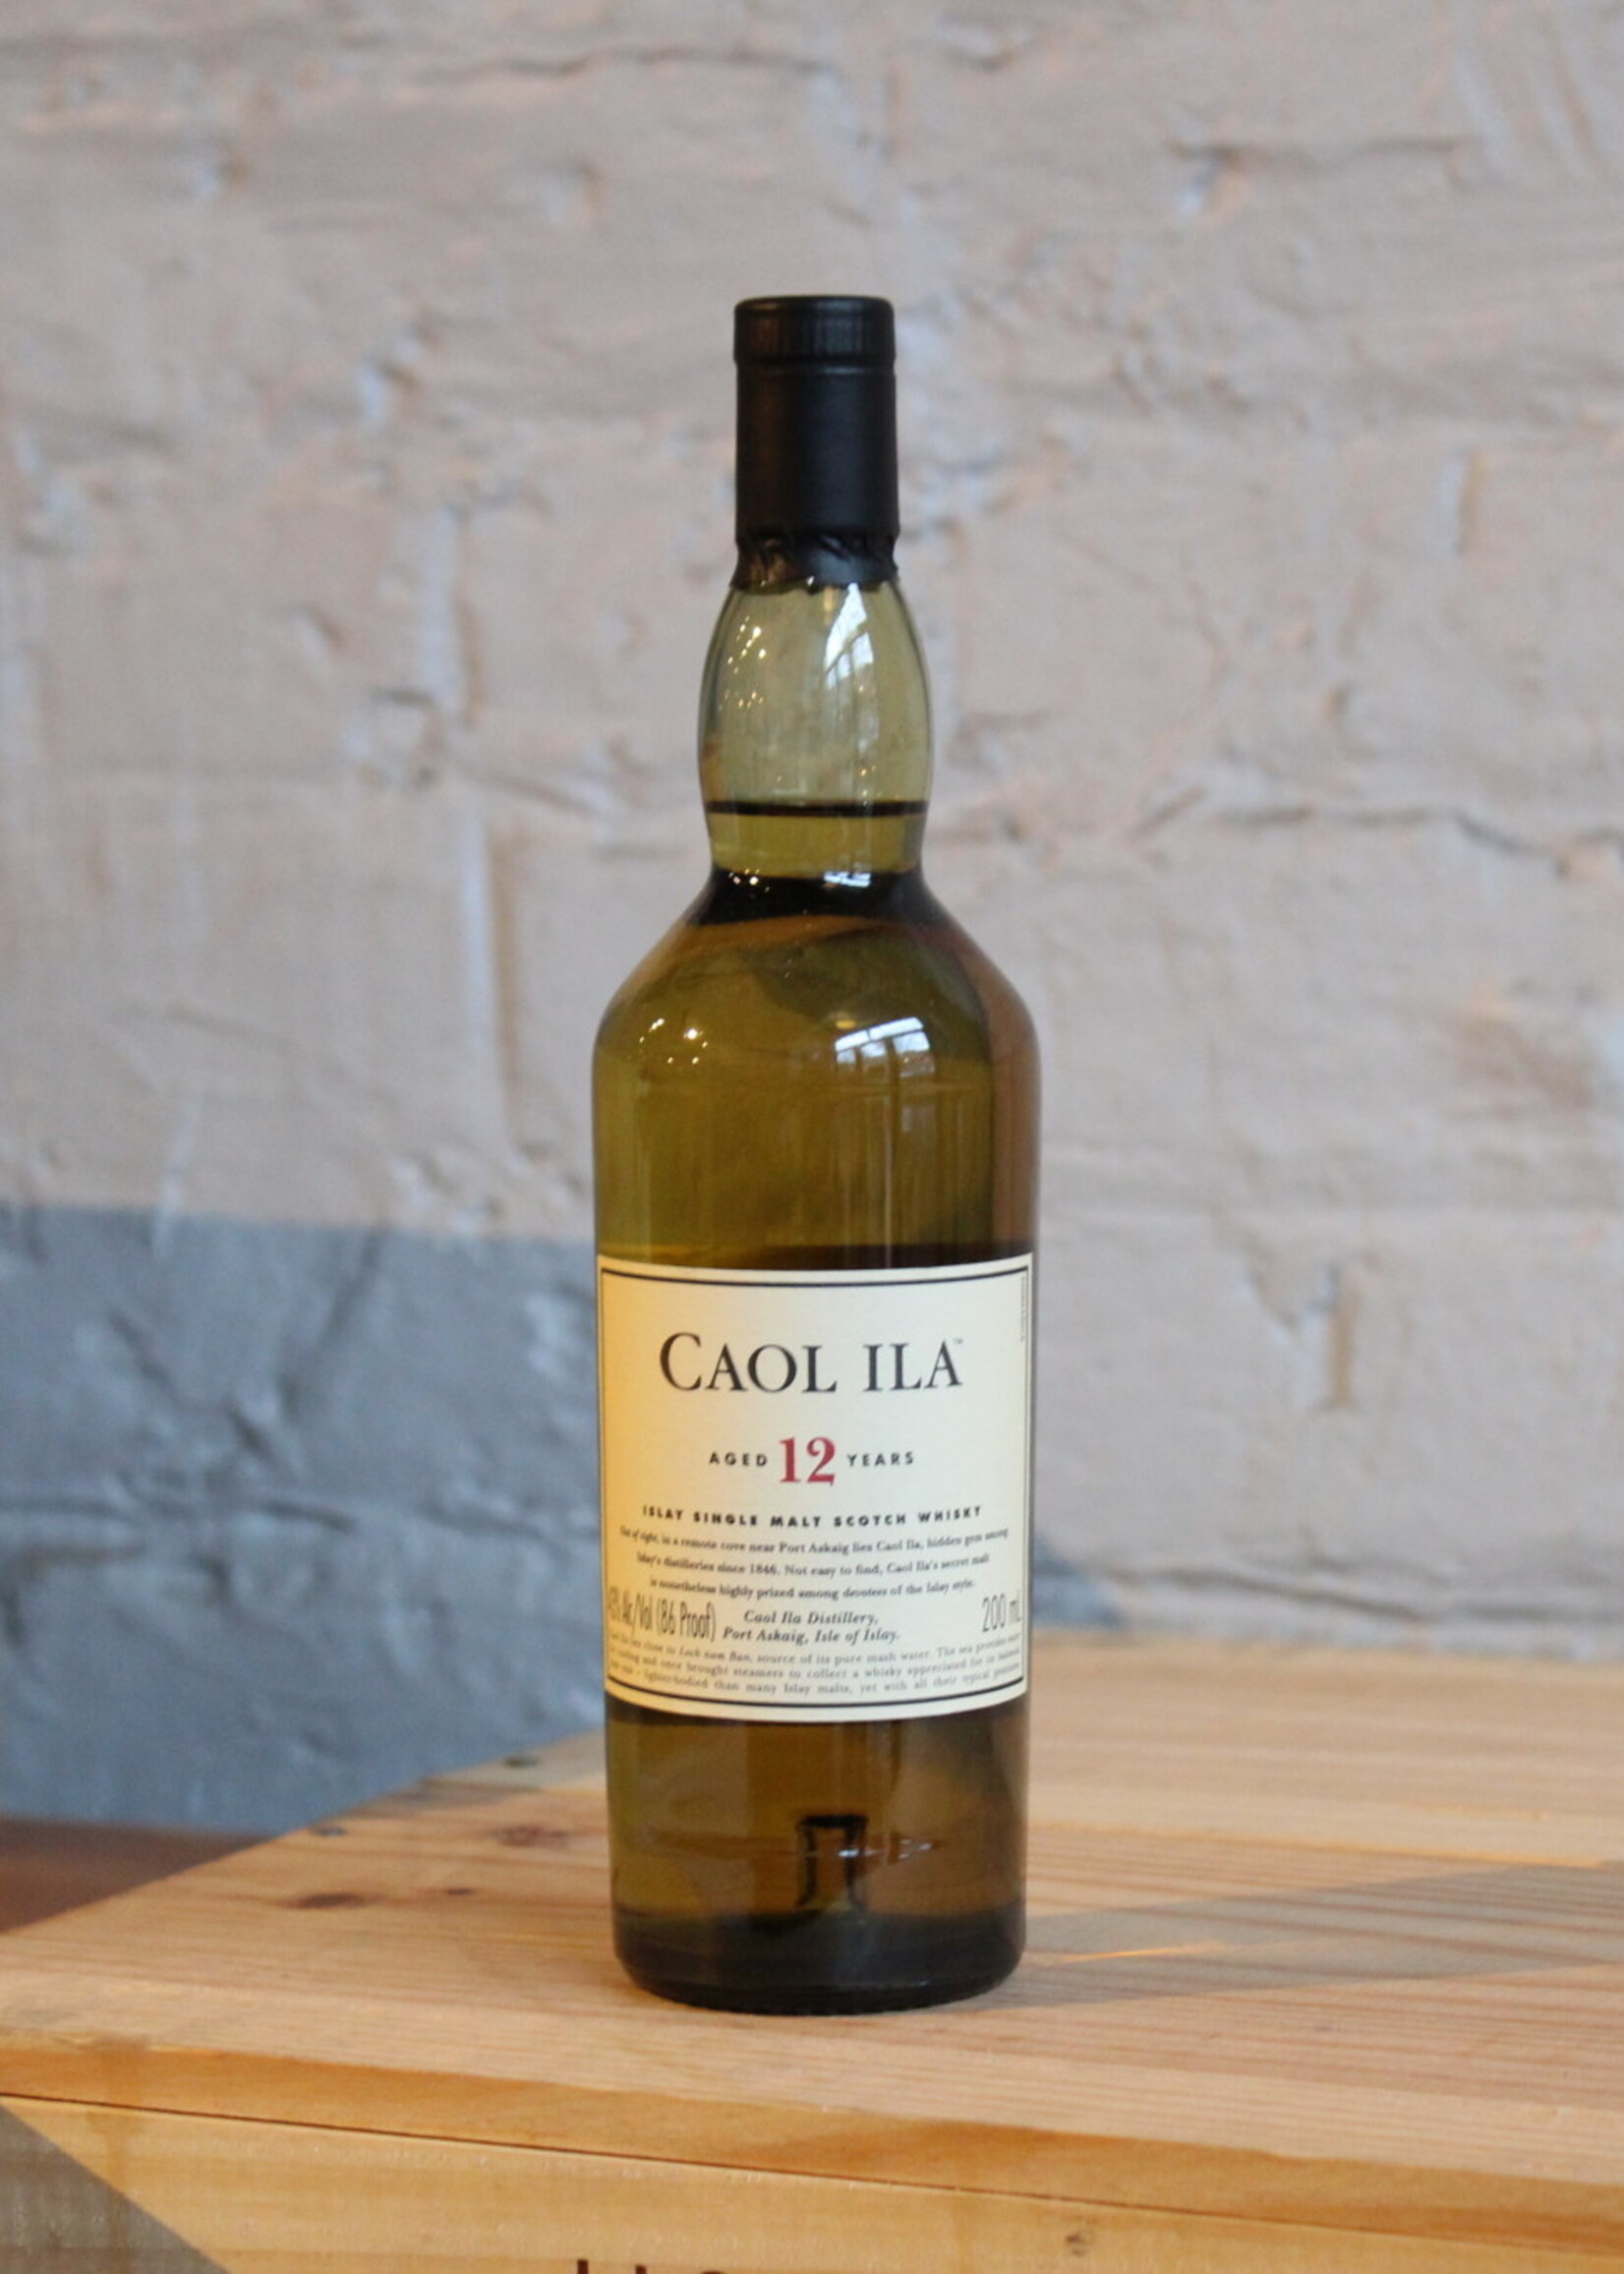 Caol Ila, Islay Single Malt Scotch Whisky